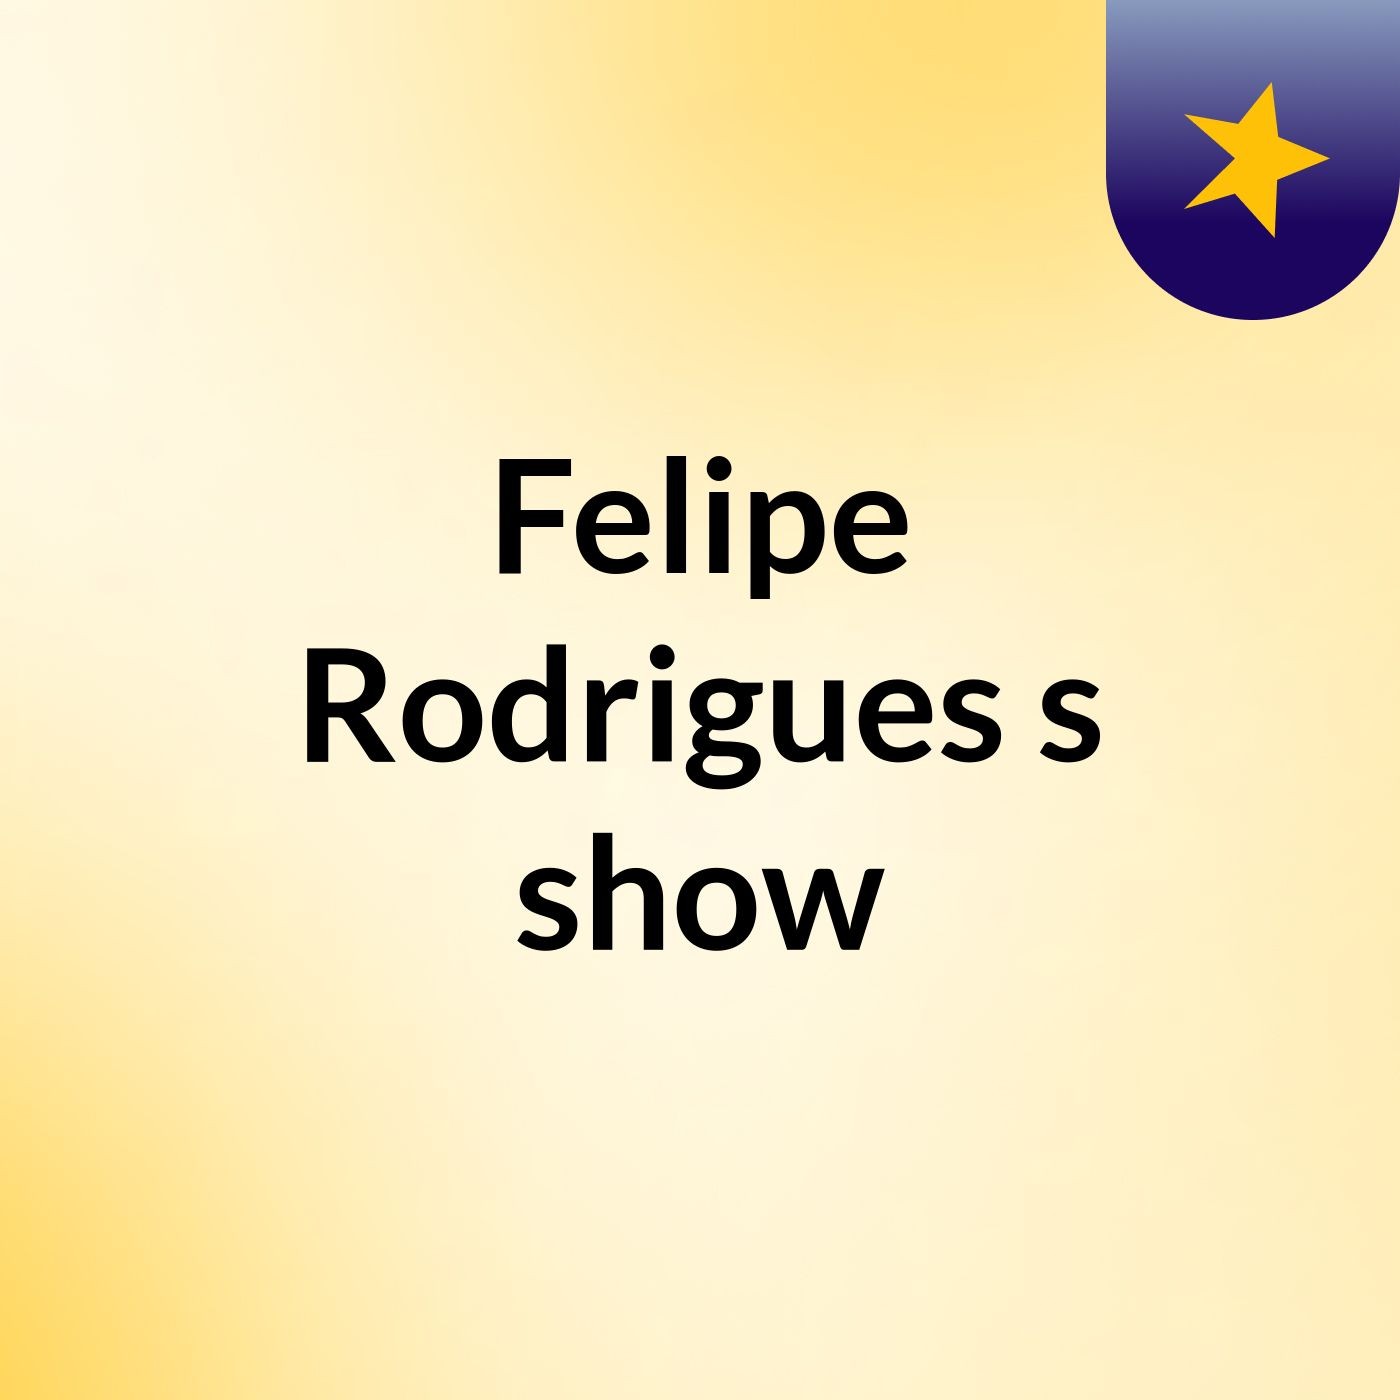 Felipe Rodrigues's show